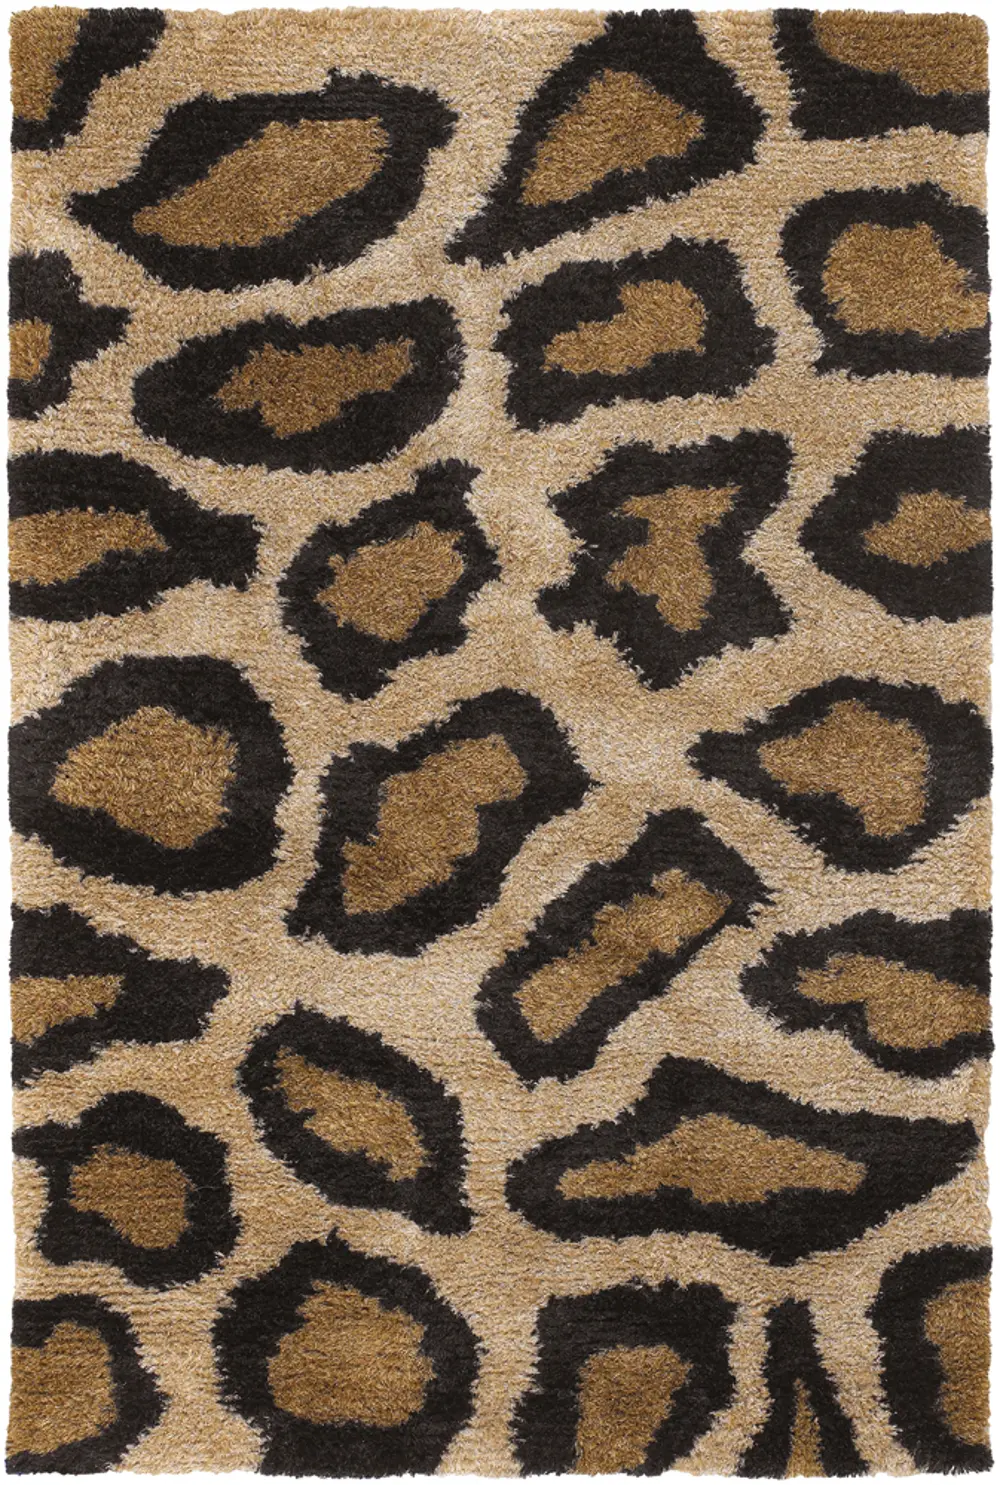 5 x 8 Medium Cheetah Print Tan Area Rug - Amazon-1